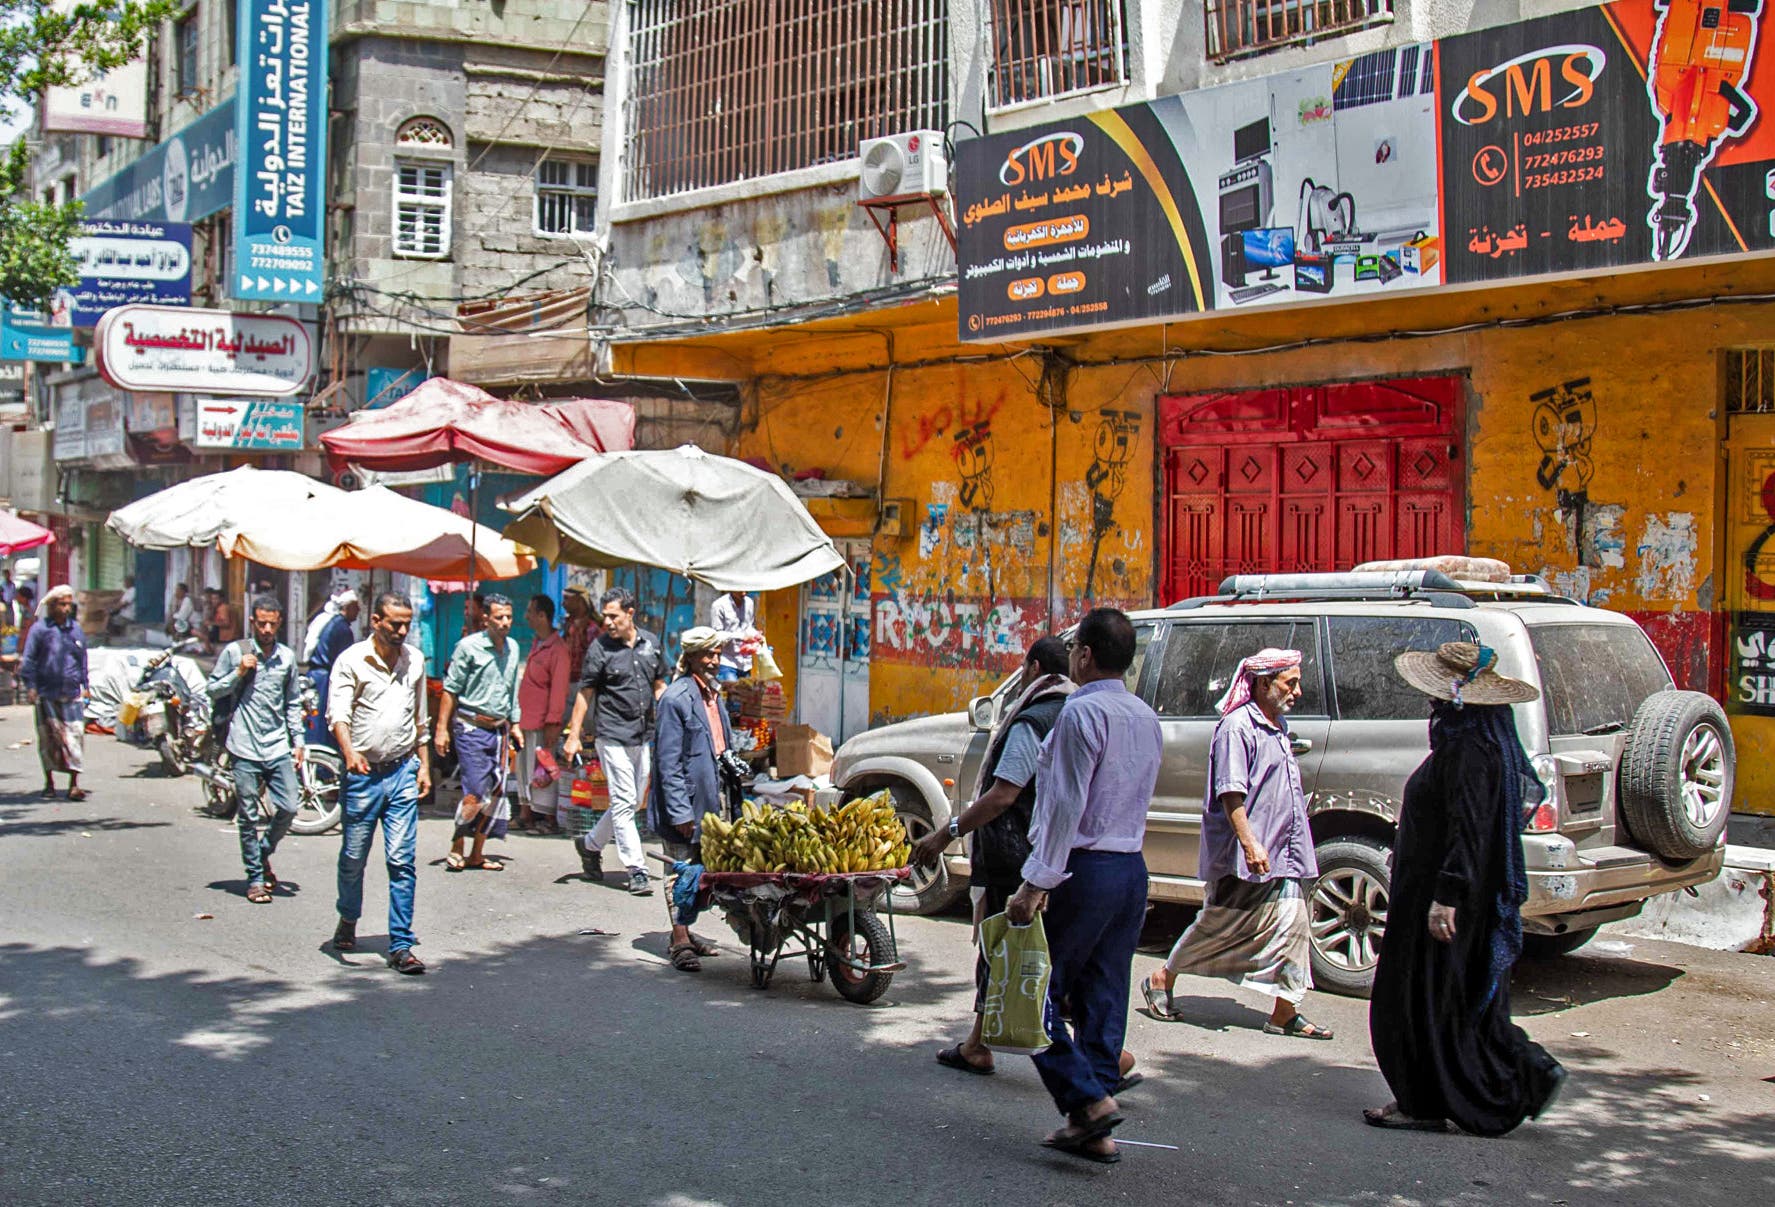 The besieged city of Taiz